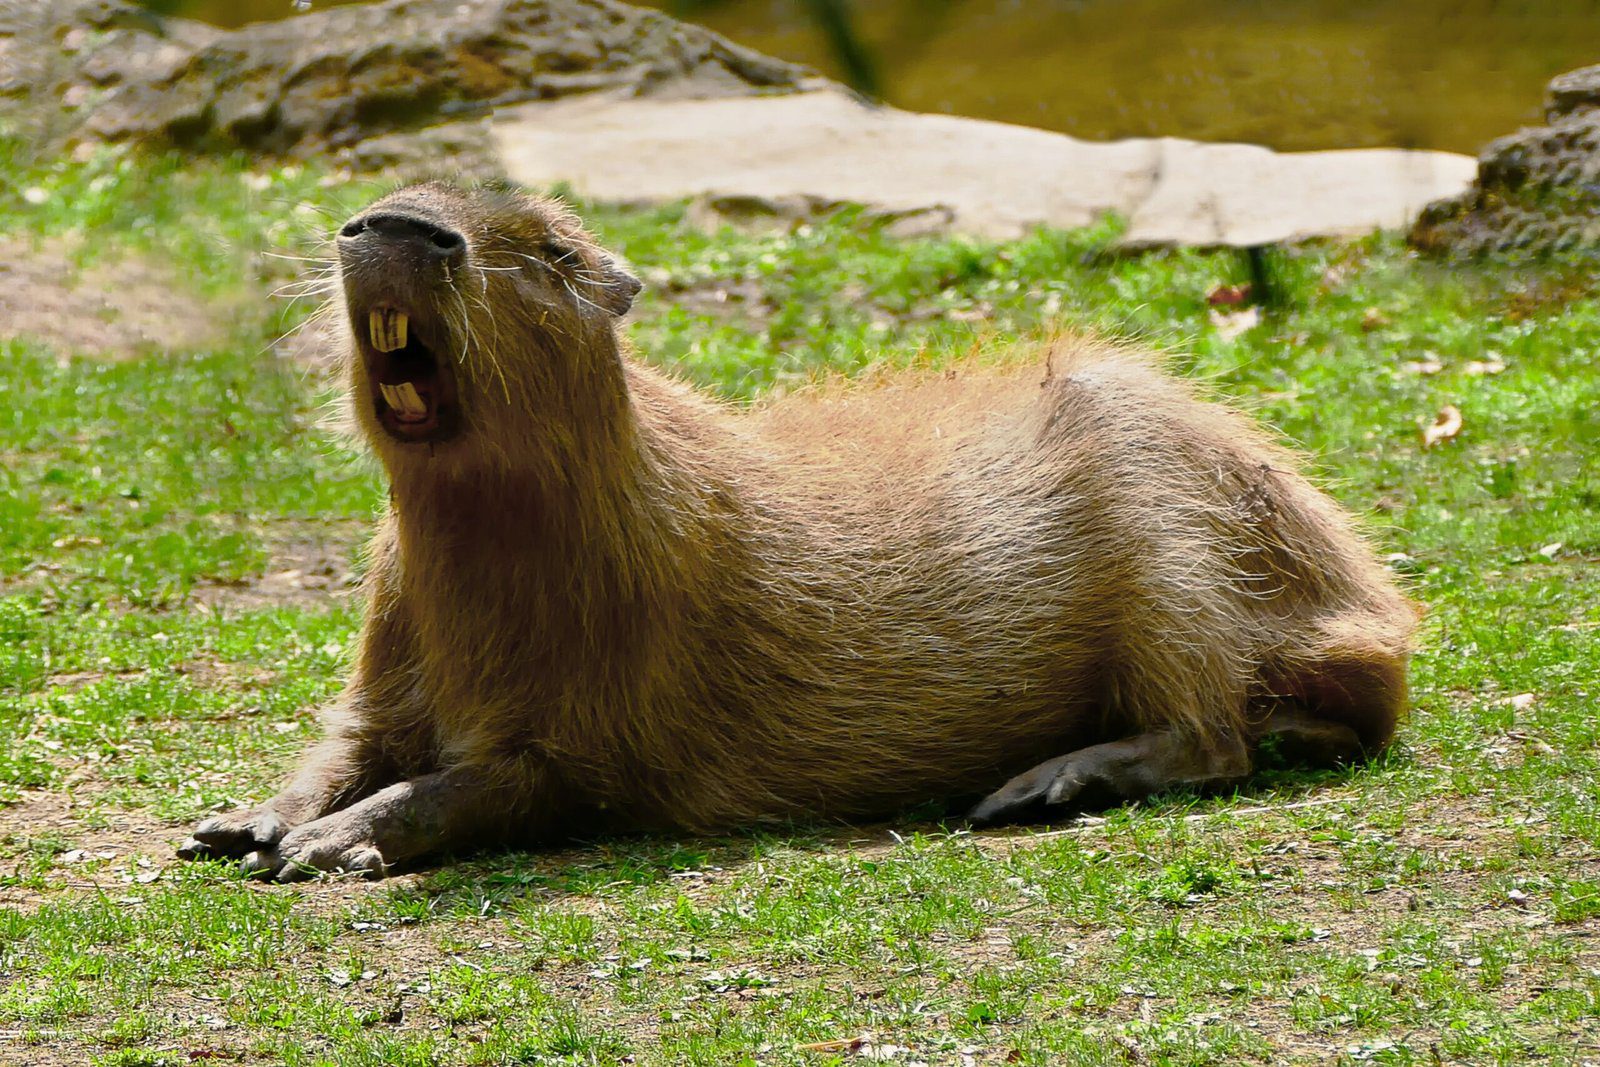 Visit Paradise Wildlife Park and Meet the Adorable Capybaras